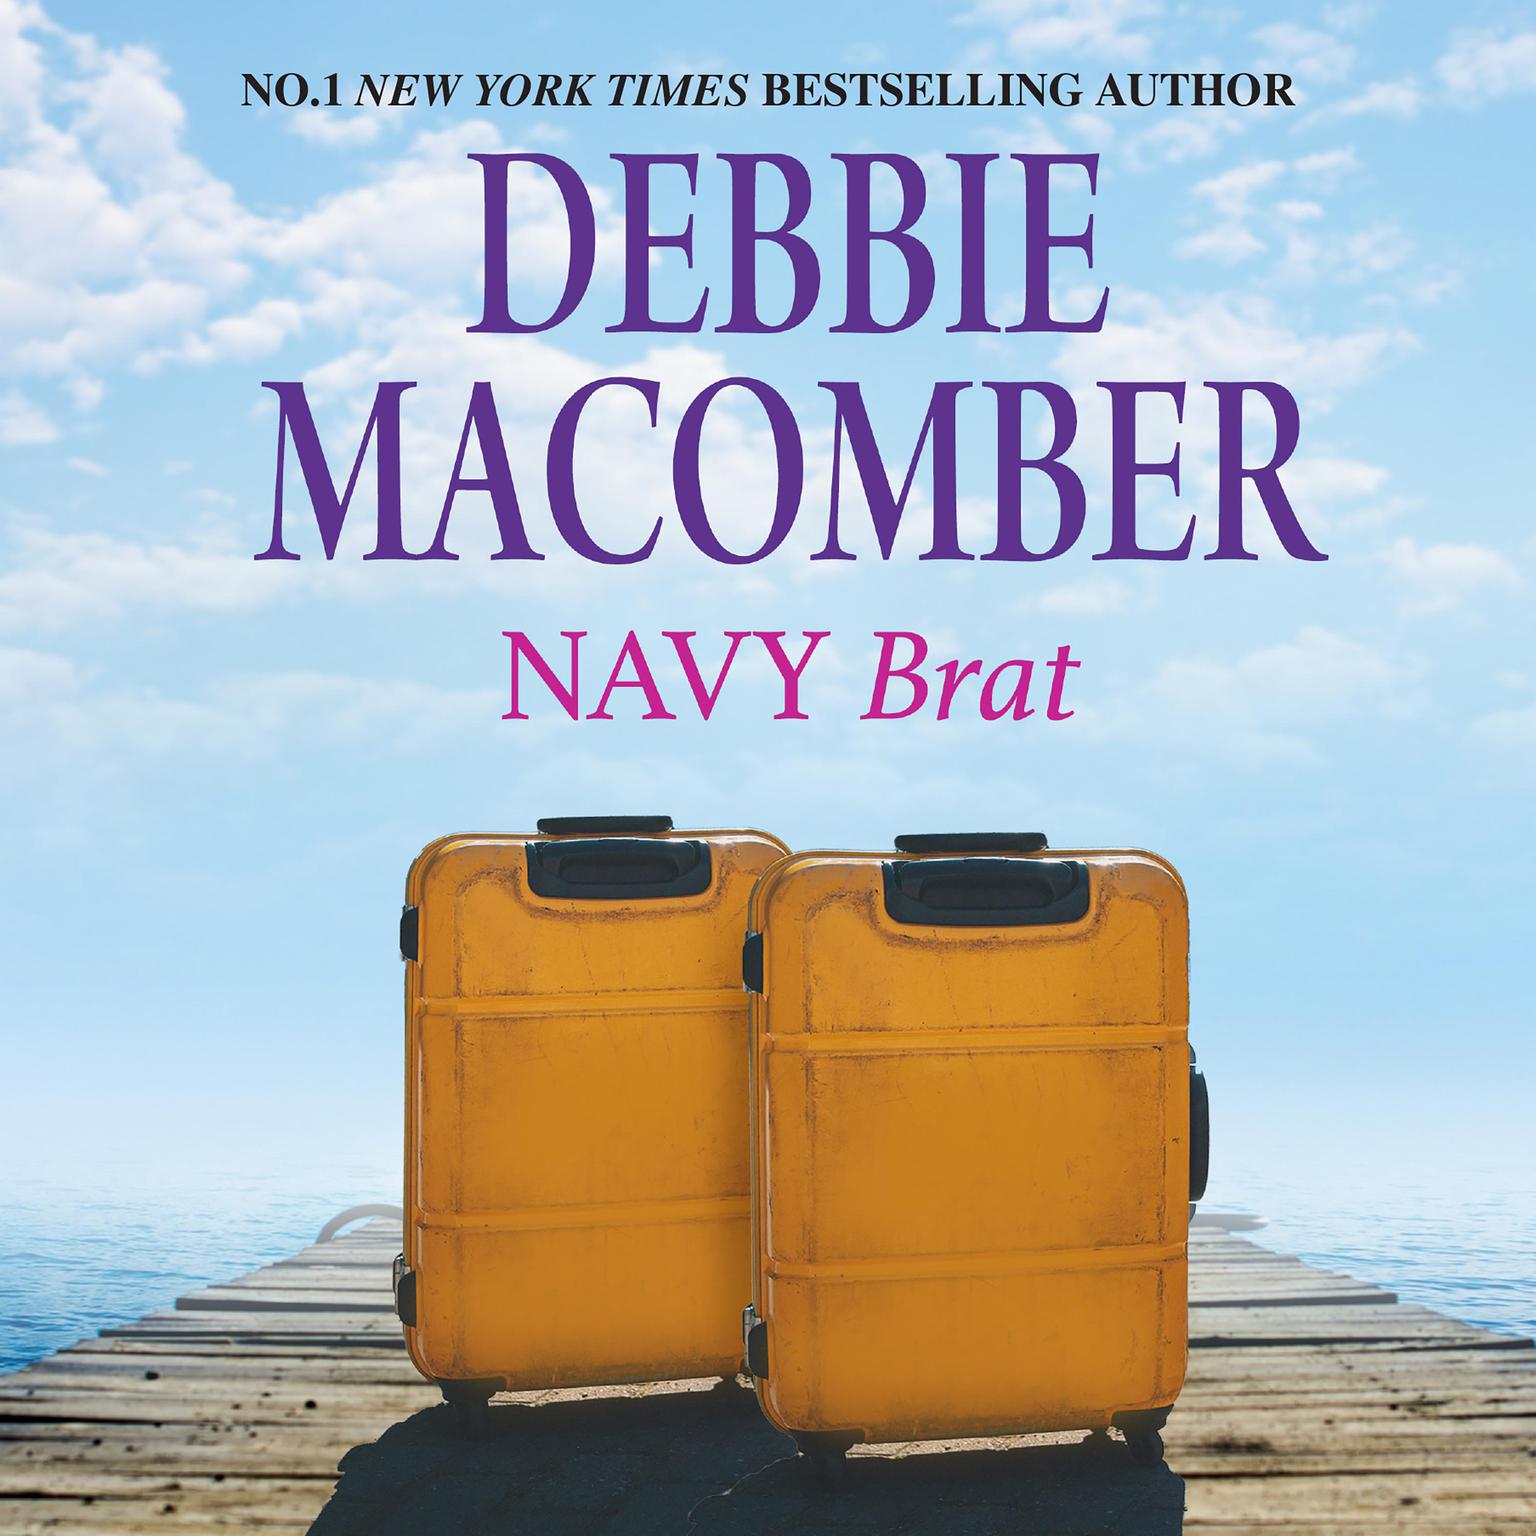 Navy Brat Audiobook, by Debbie Macomber